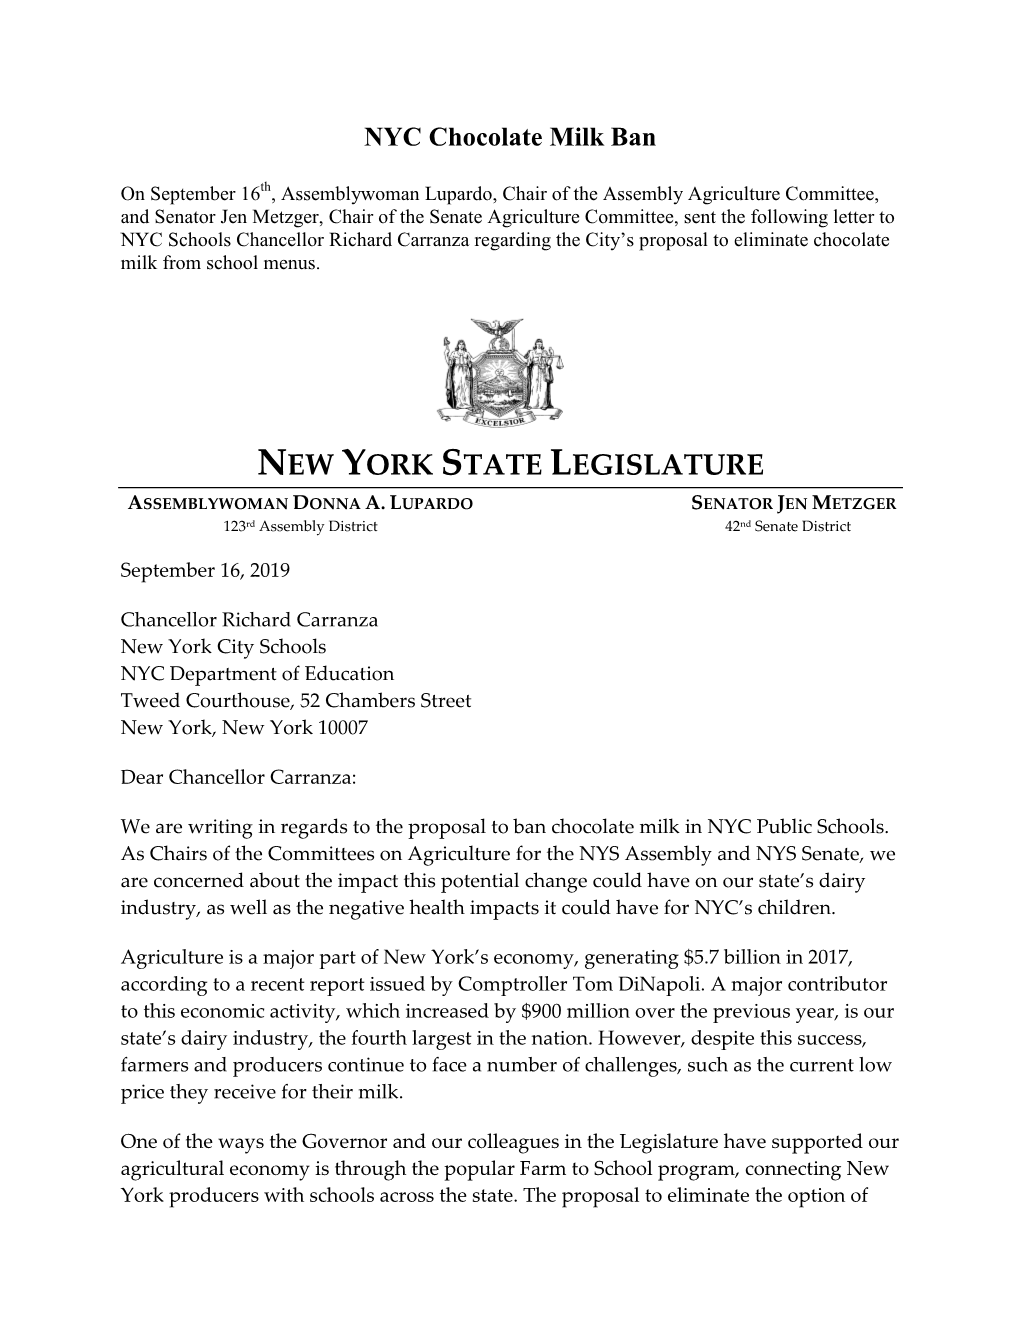 New York State Legislature Assemblywoman Donna A